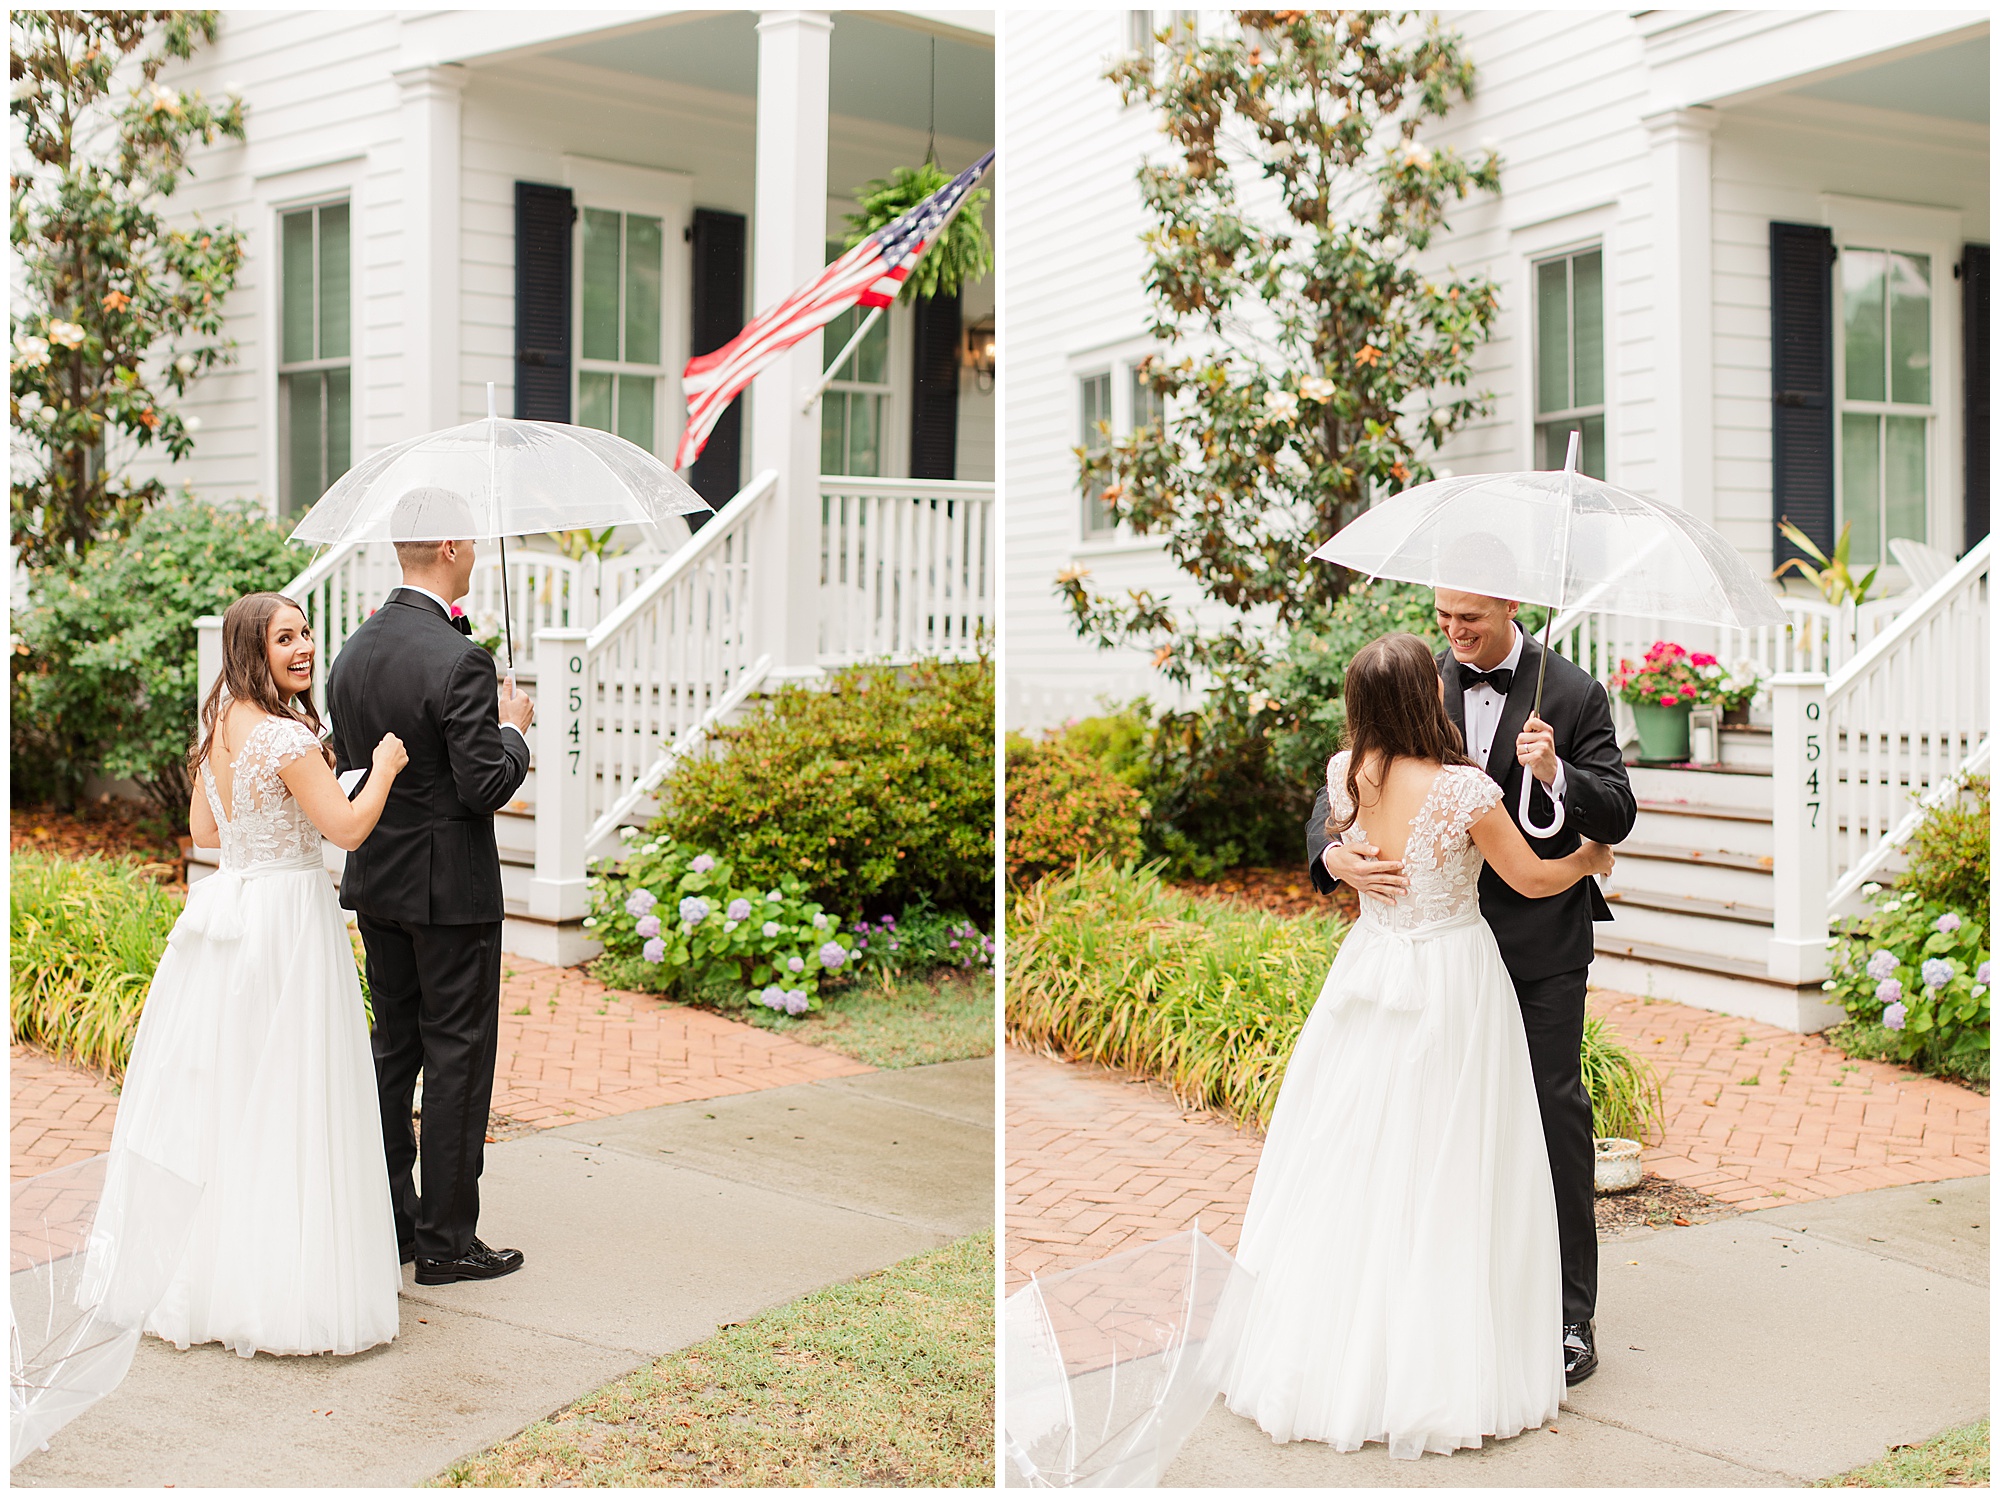 Danielle & Chris, East Beach wedding, Hampton Roads weddings, Kelley Stinson Photography, rainy wedding day, first look